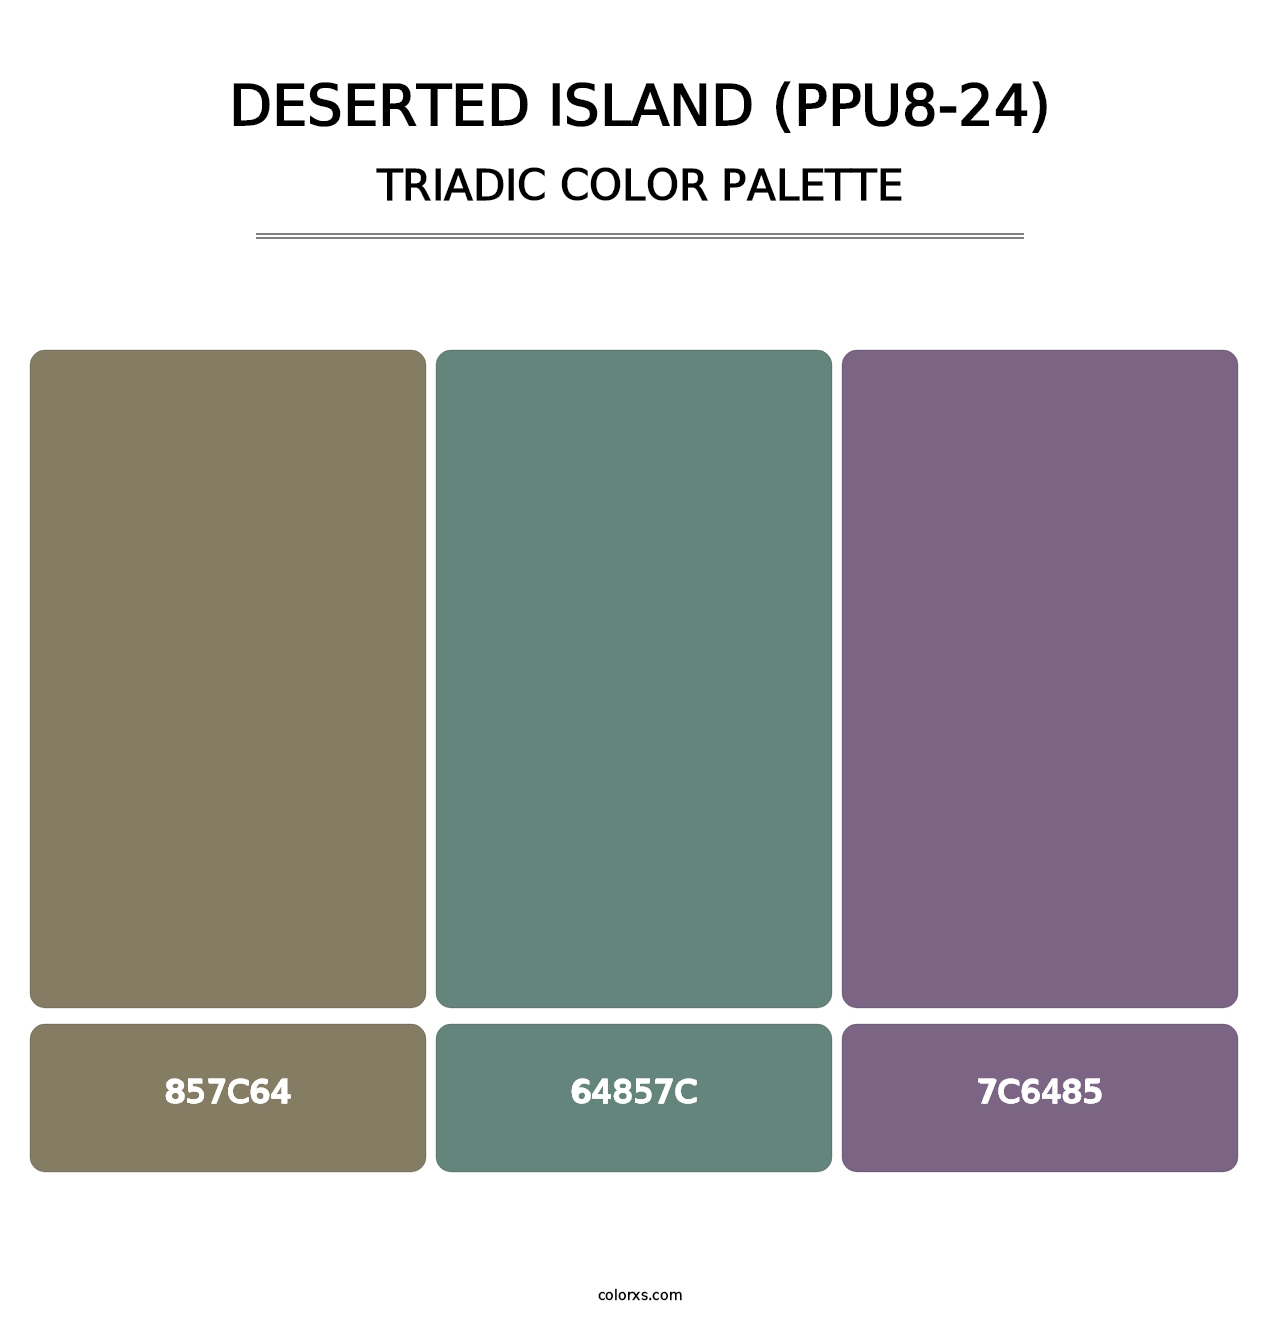 Deserted Island (PPU8-24) - Triadic Color Palette